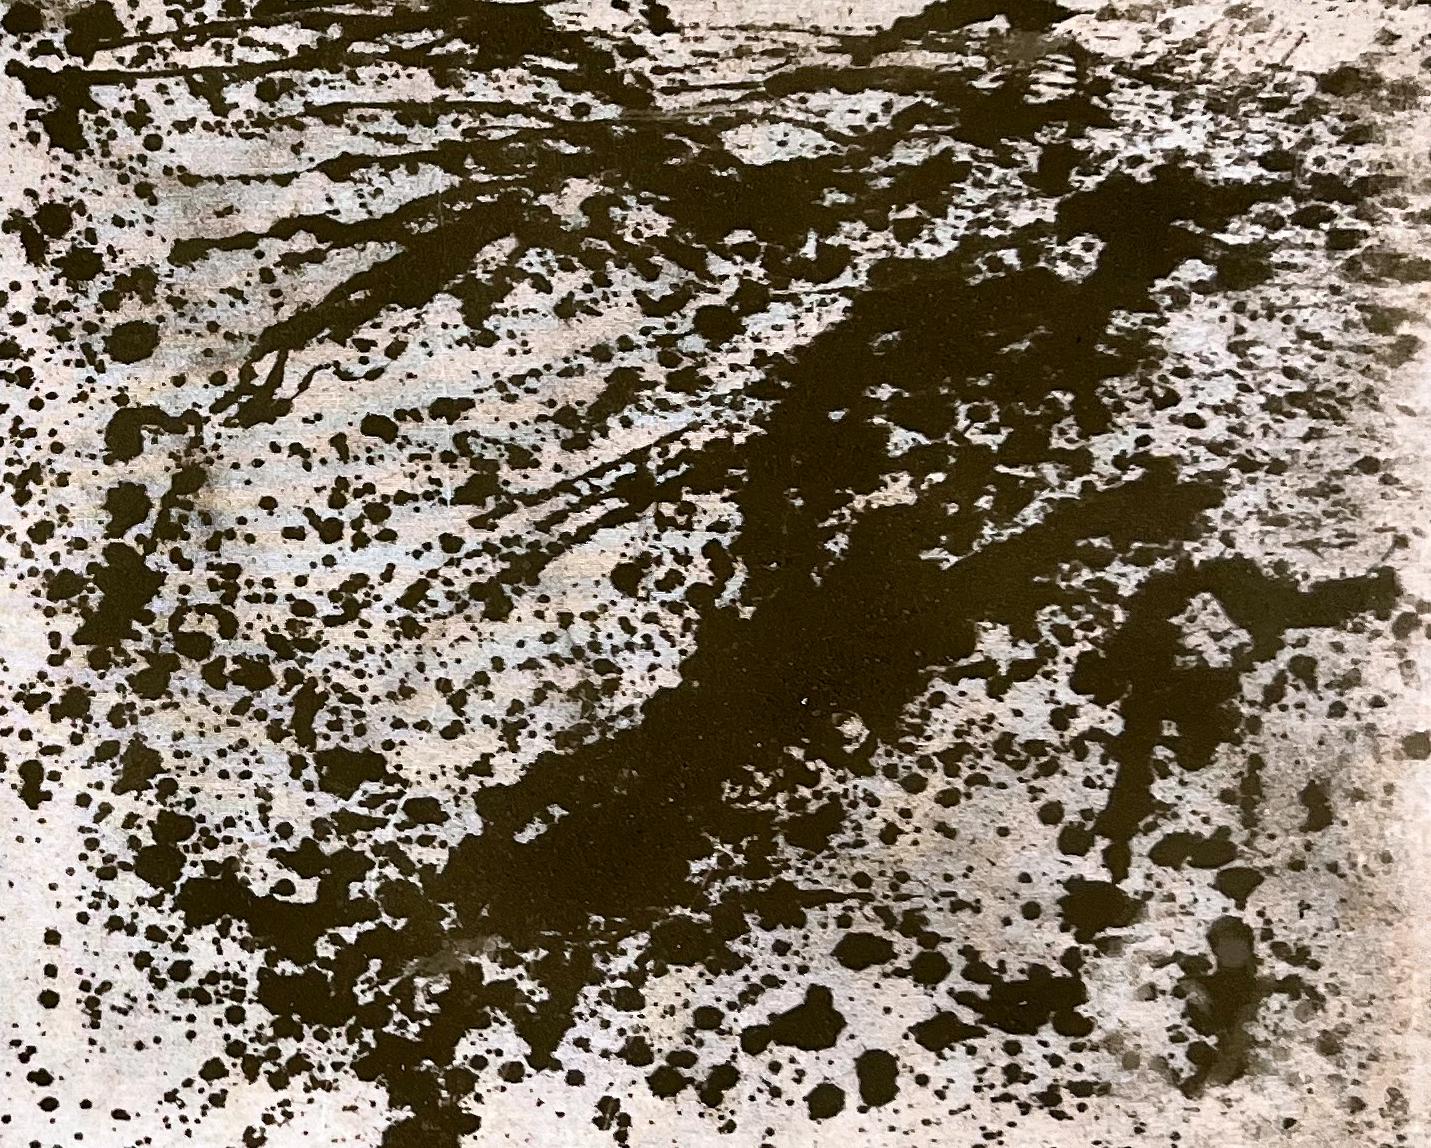 TUSET Abstract Drawing – Neoexpressionist / Brown Pigment auf roher Leinwand, Kiefernholz, signiert, ein Unikat.